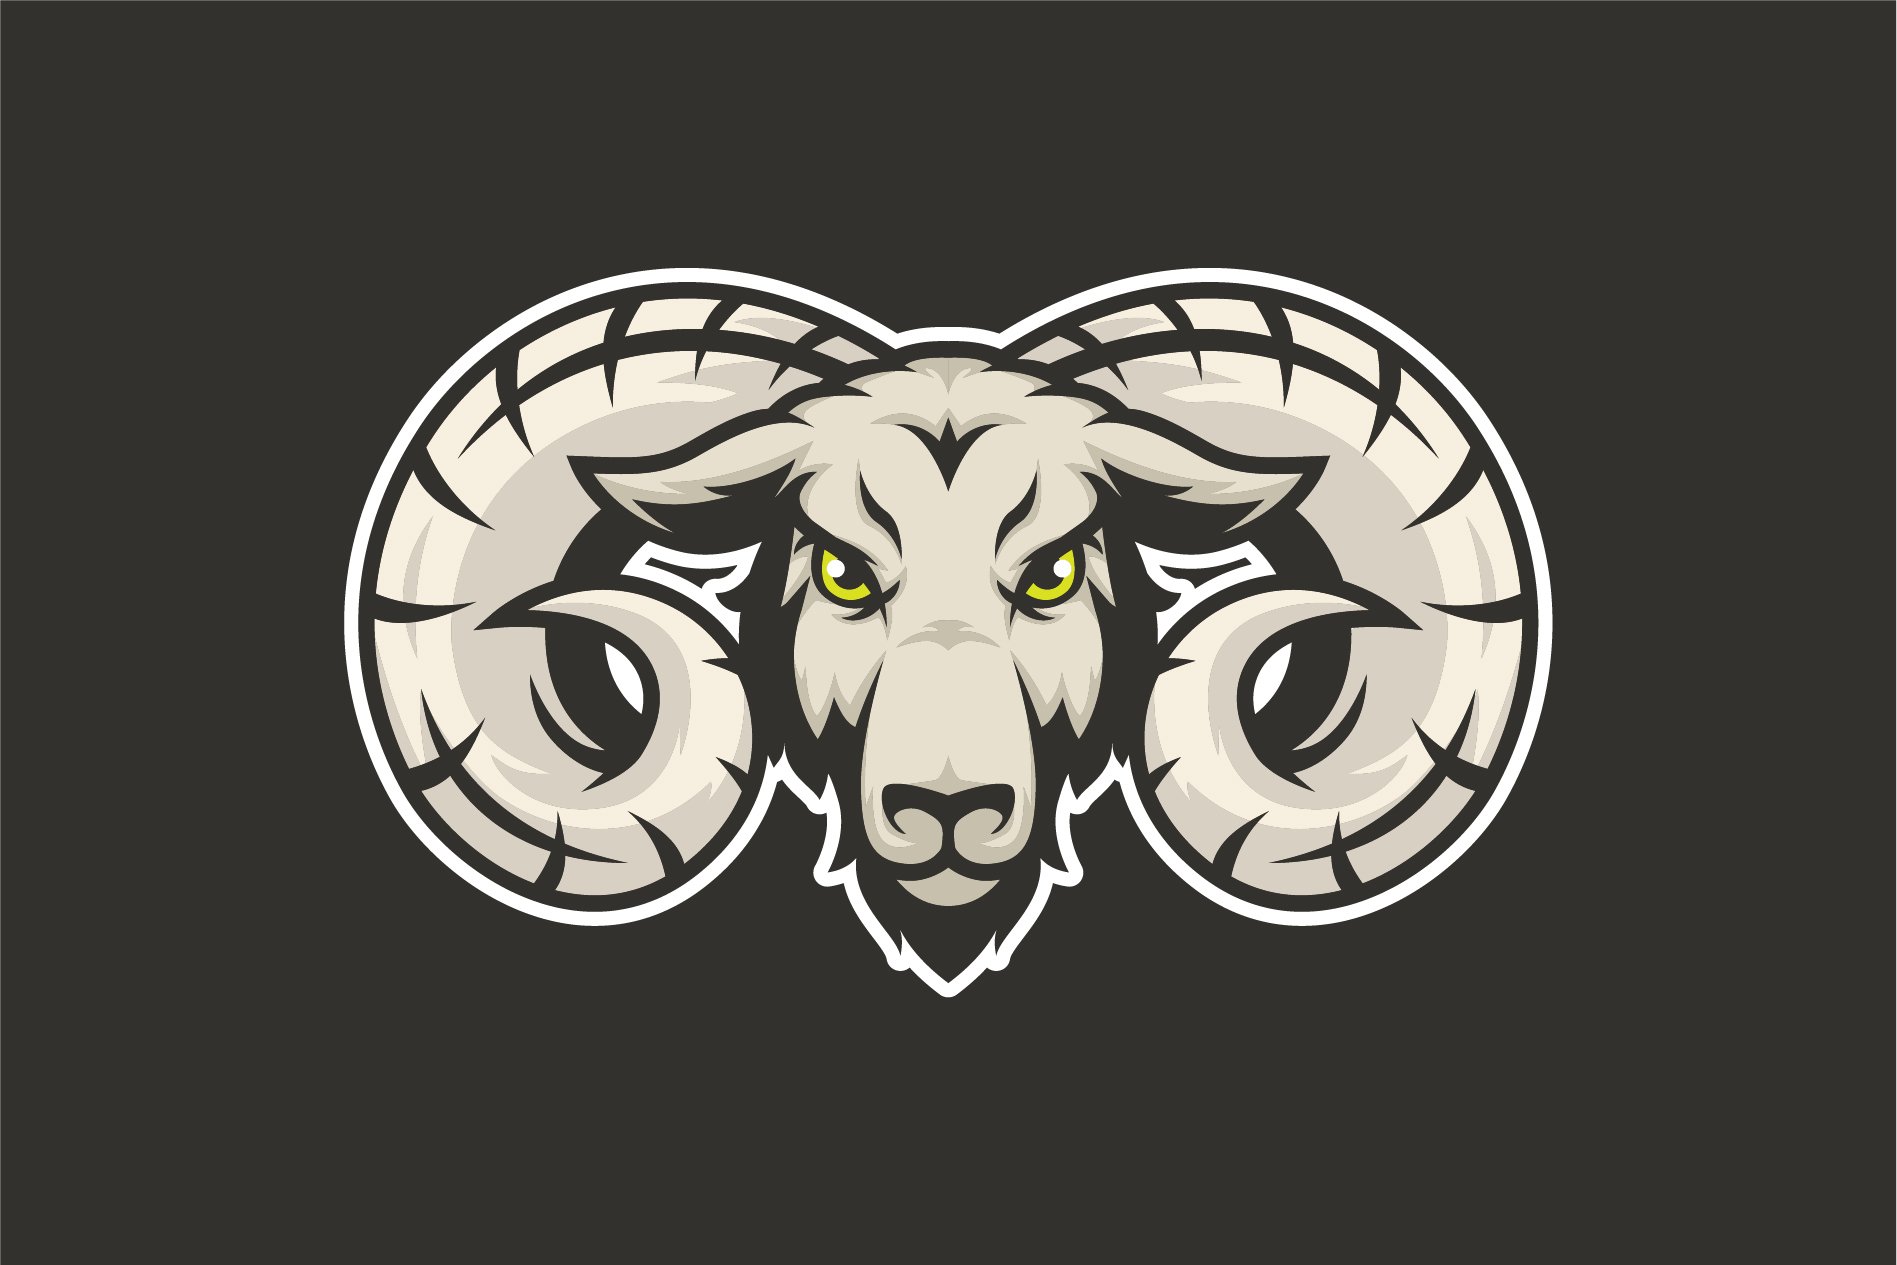 Goat Head Squad-Mascot & Esport Logo cover image.